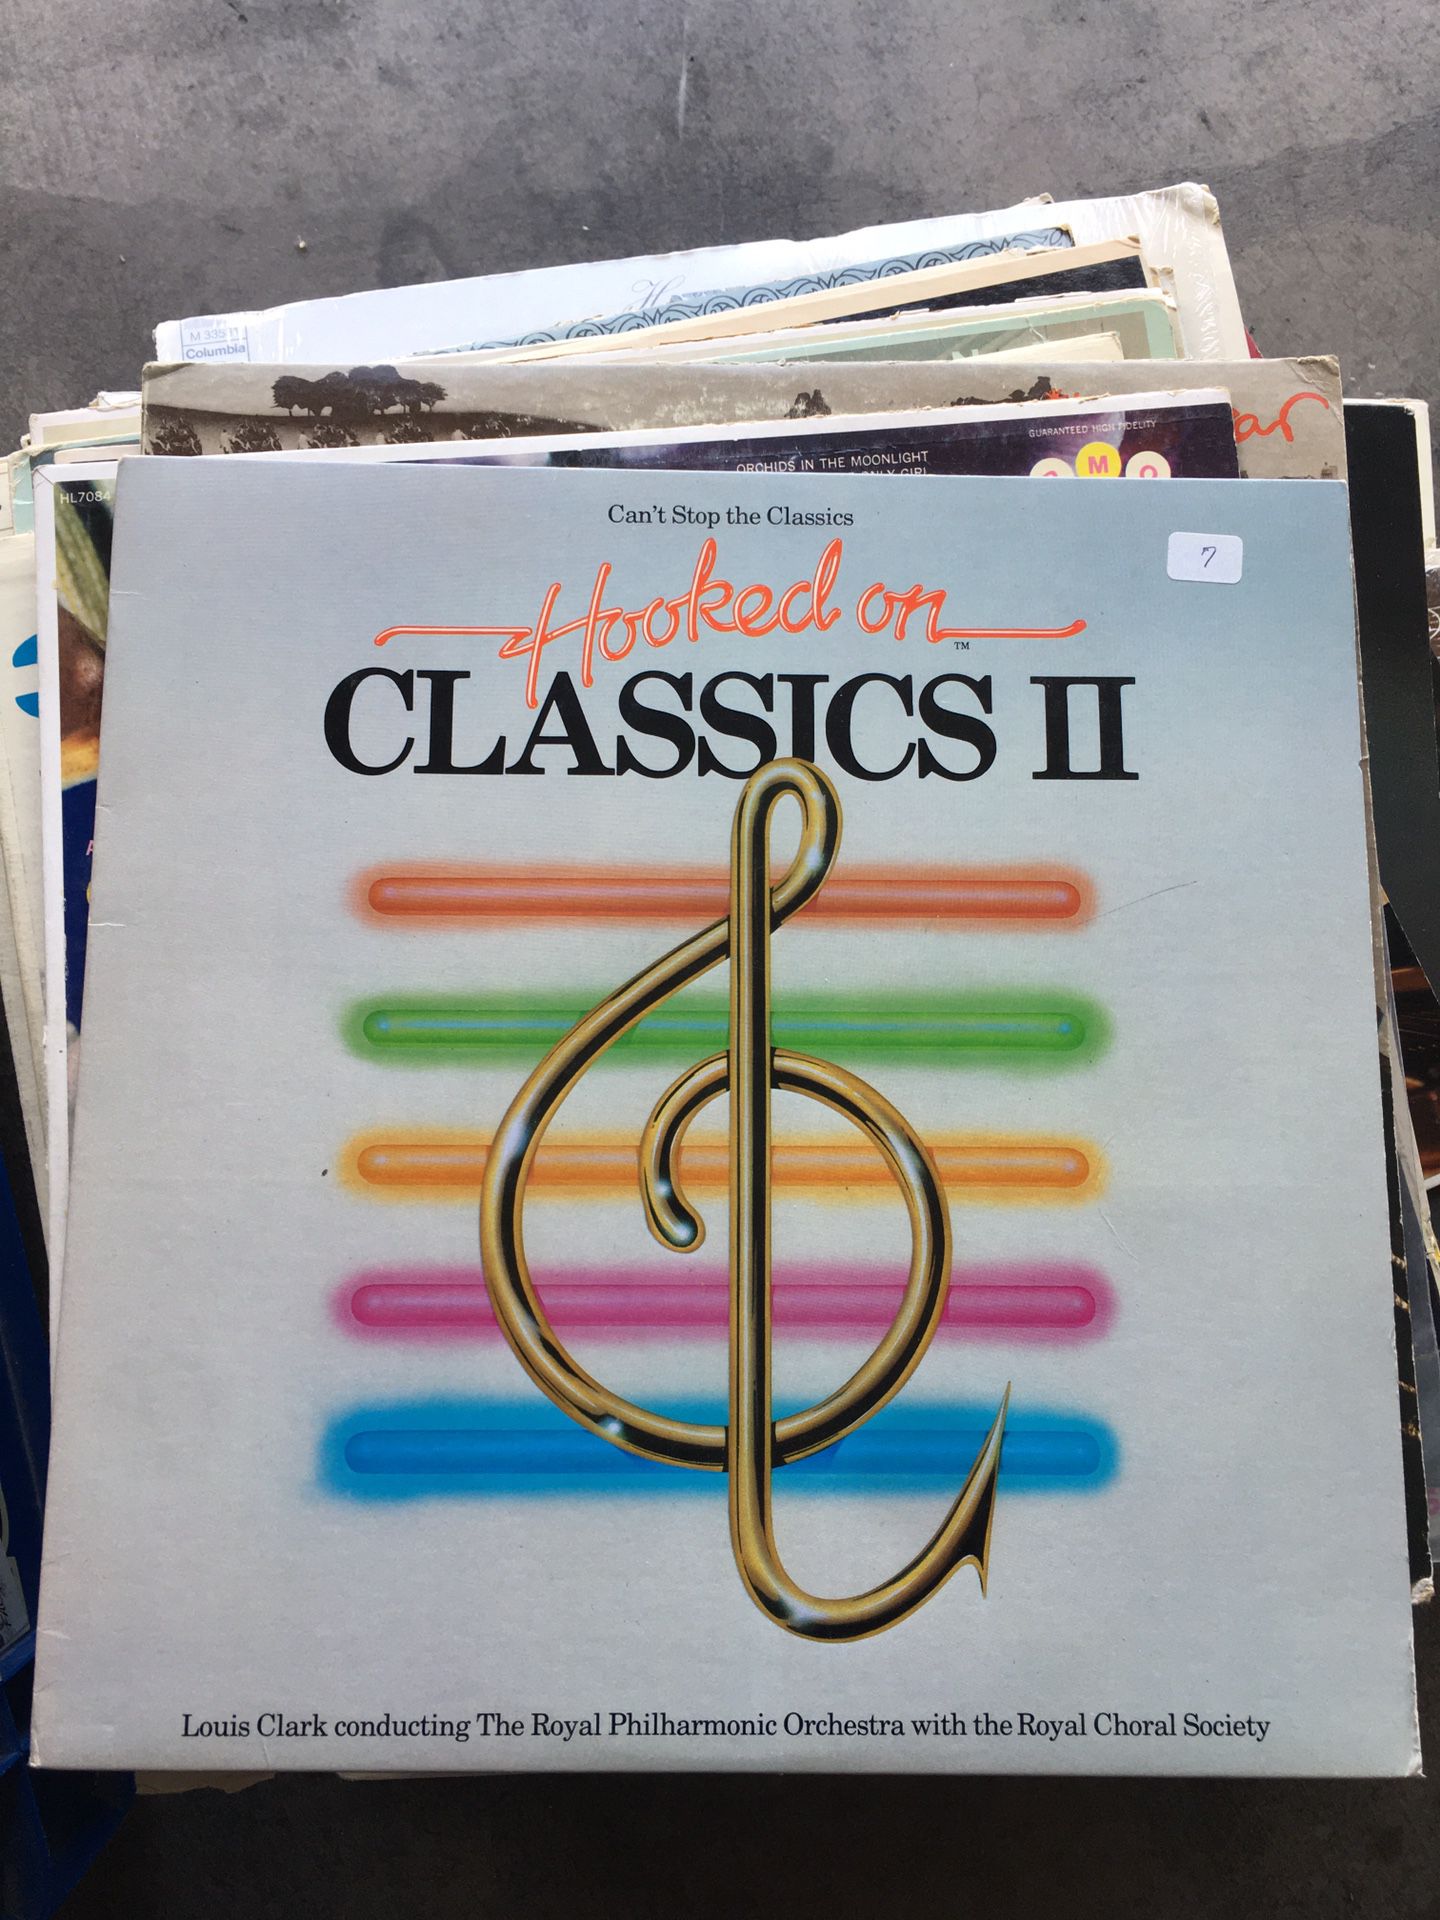 Hooked on classics II Vinyl record 12 inch